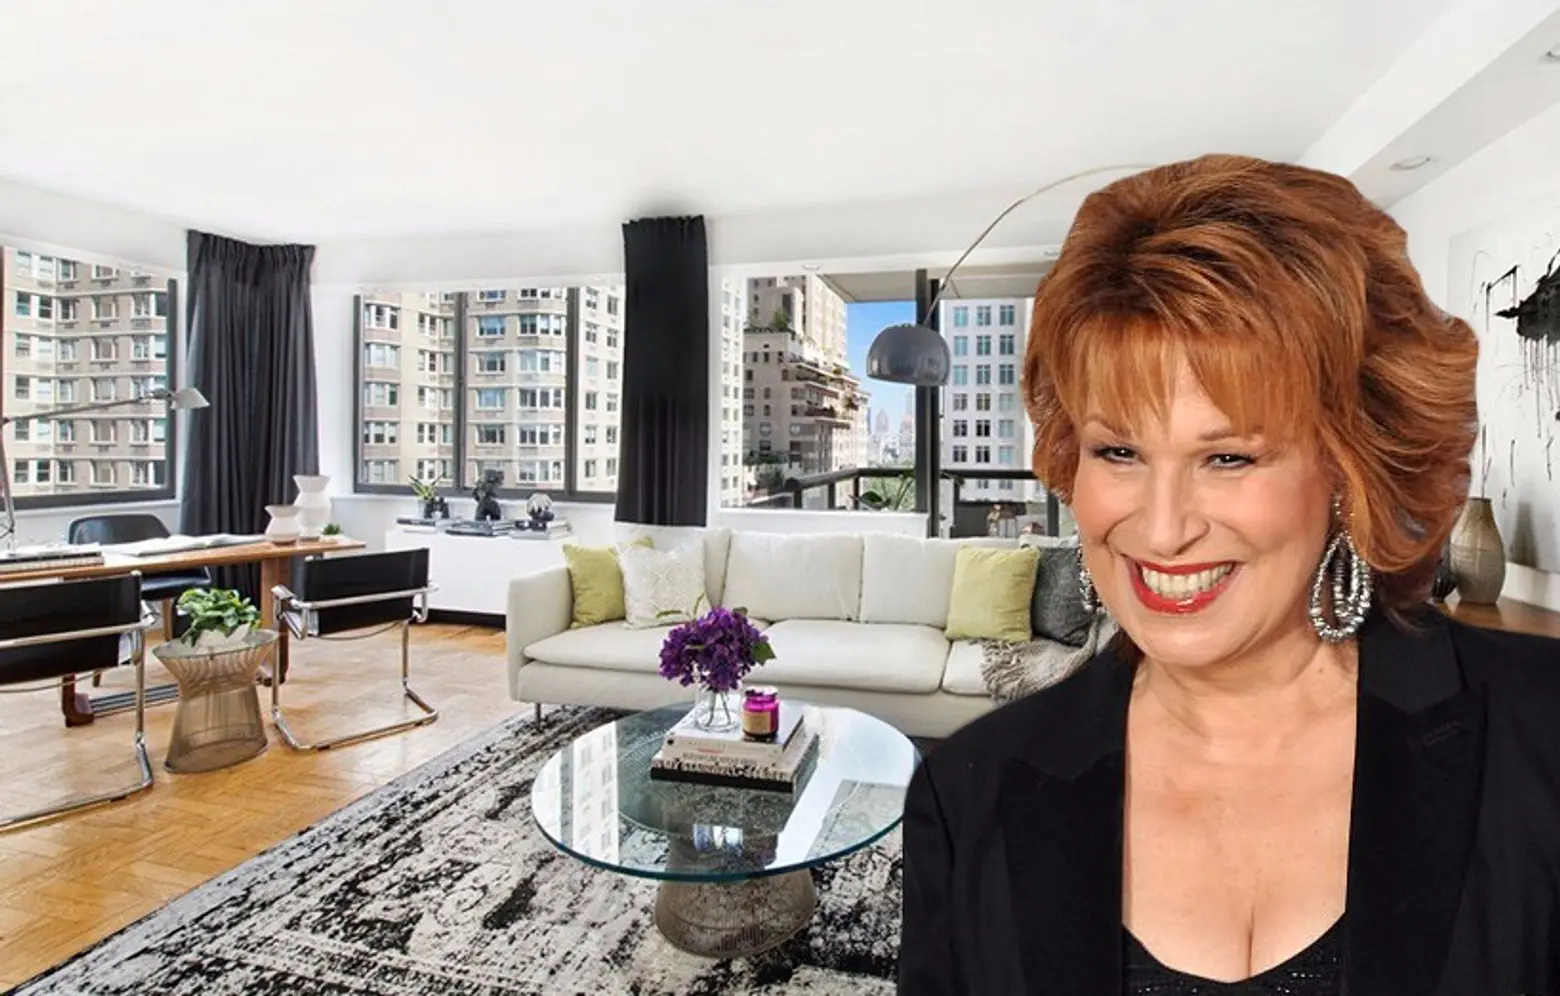 ‘The View’ co-host Joy Behar drops $2.4M on a mod Upper West Side condo